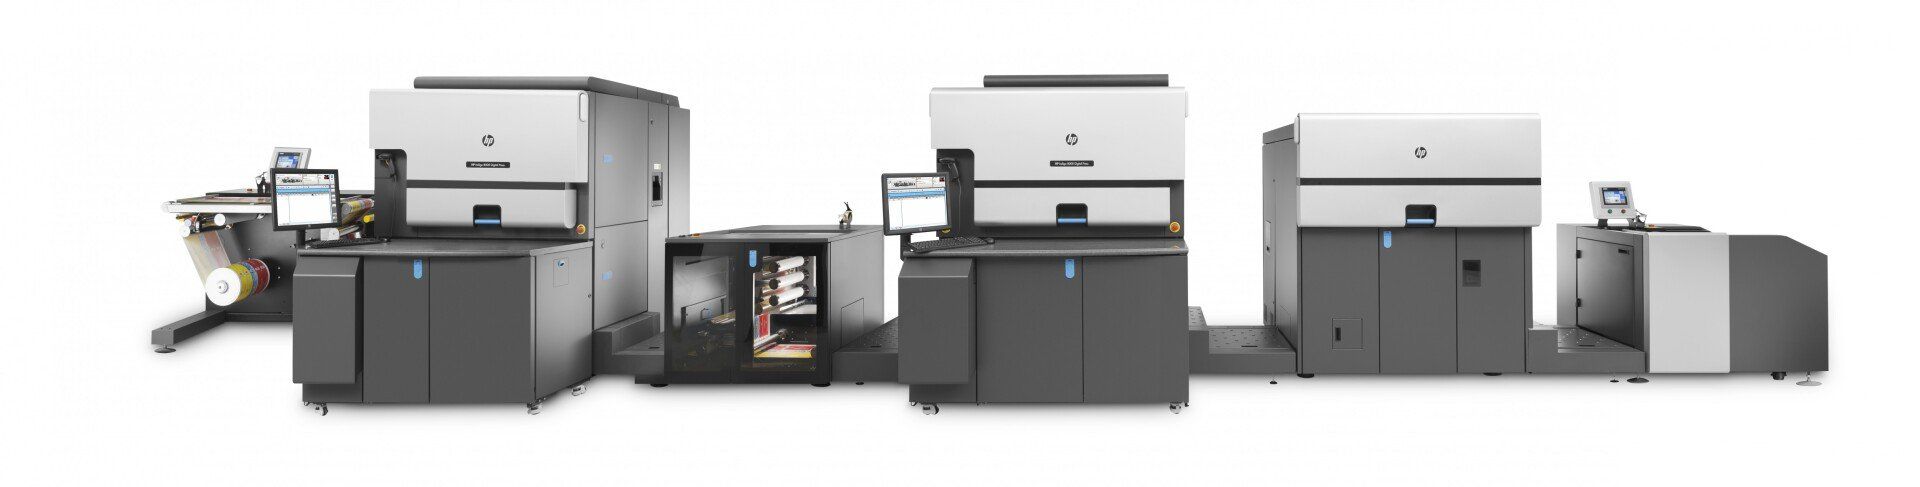 Image of full HP Indigo 8000 press